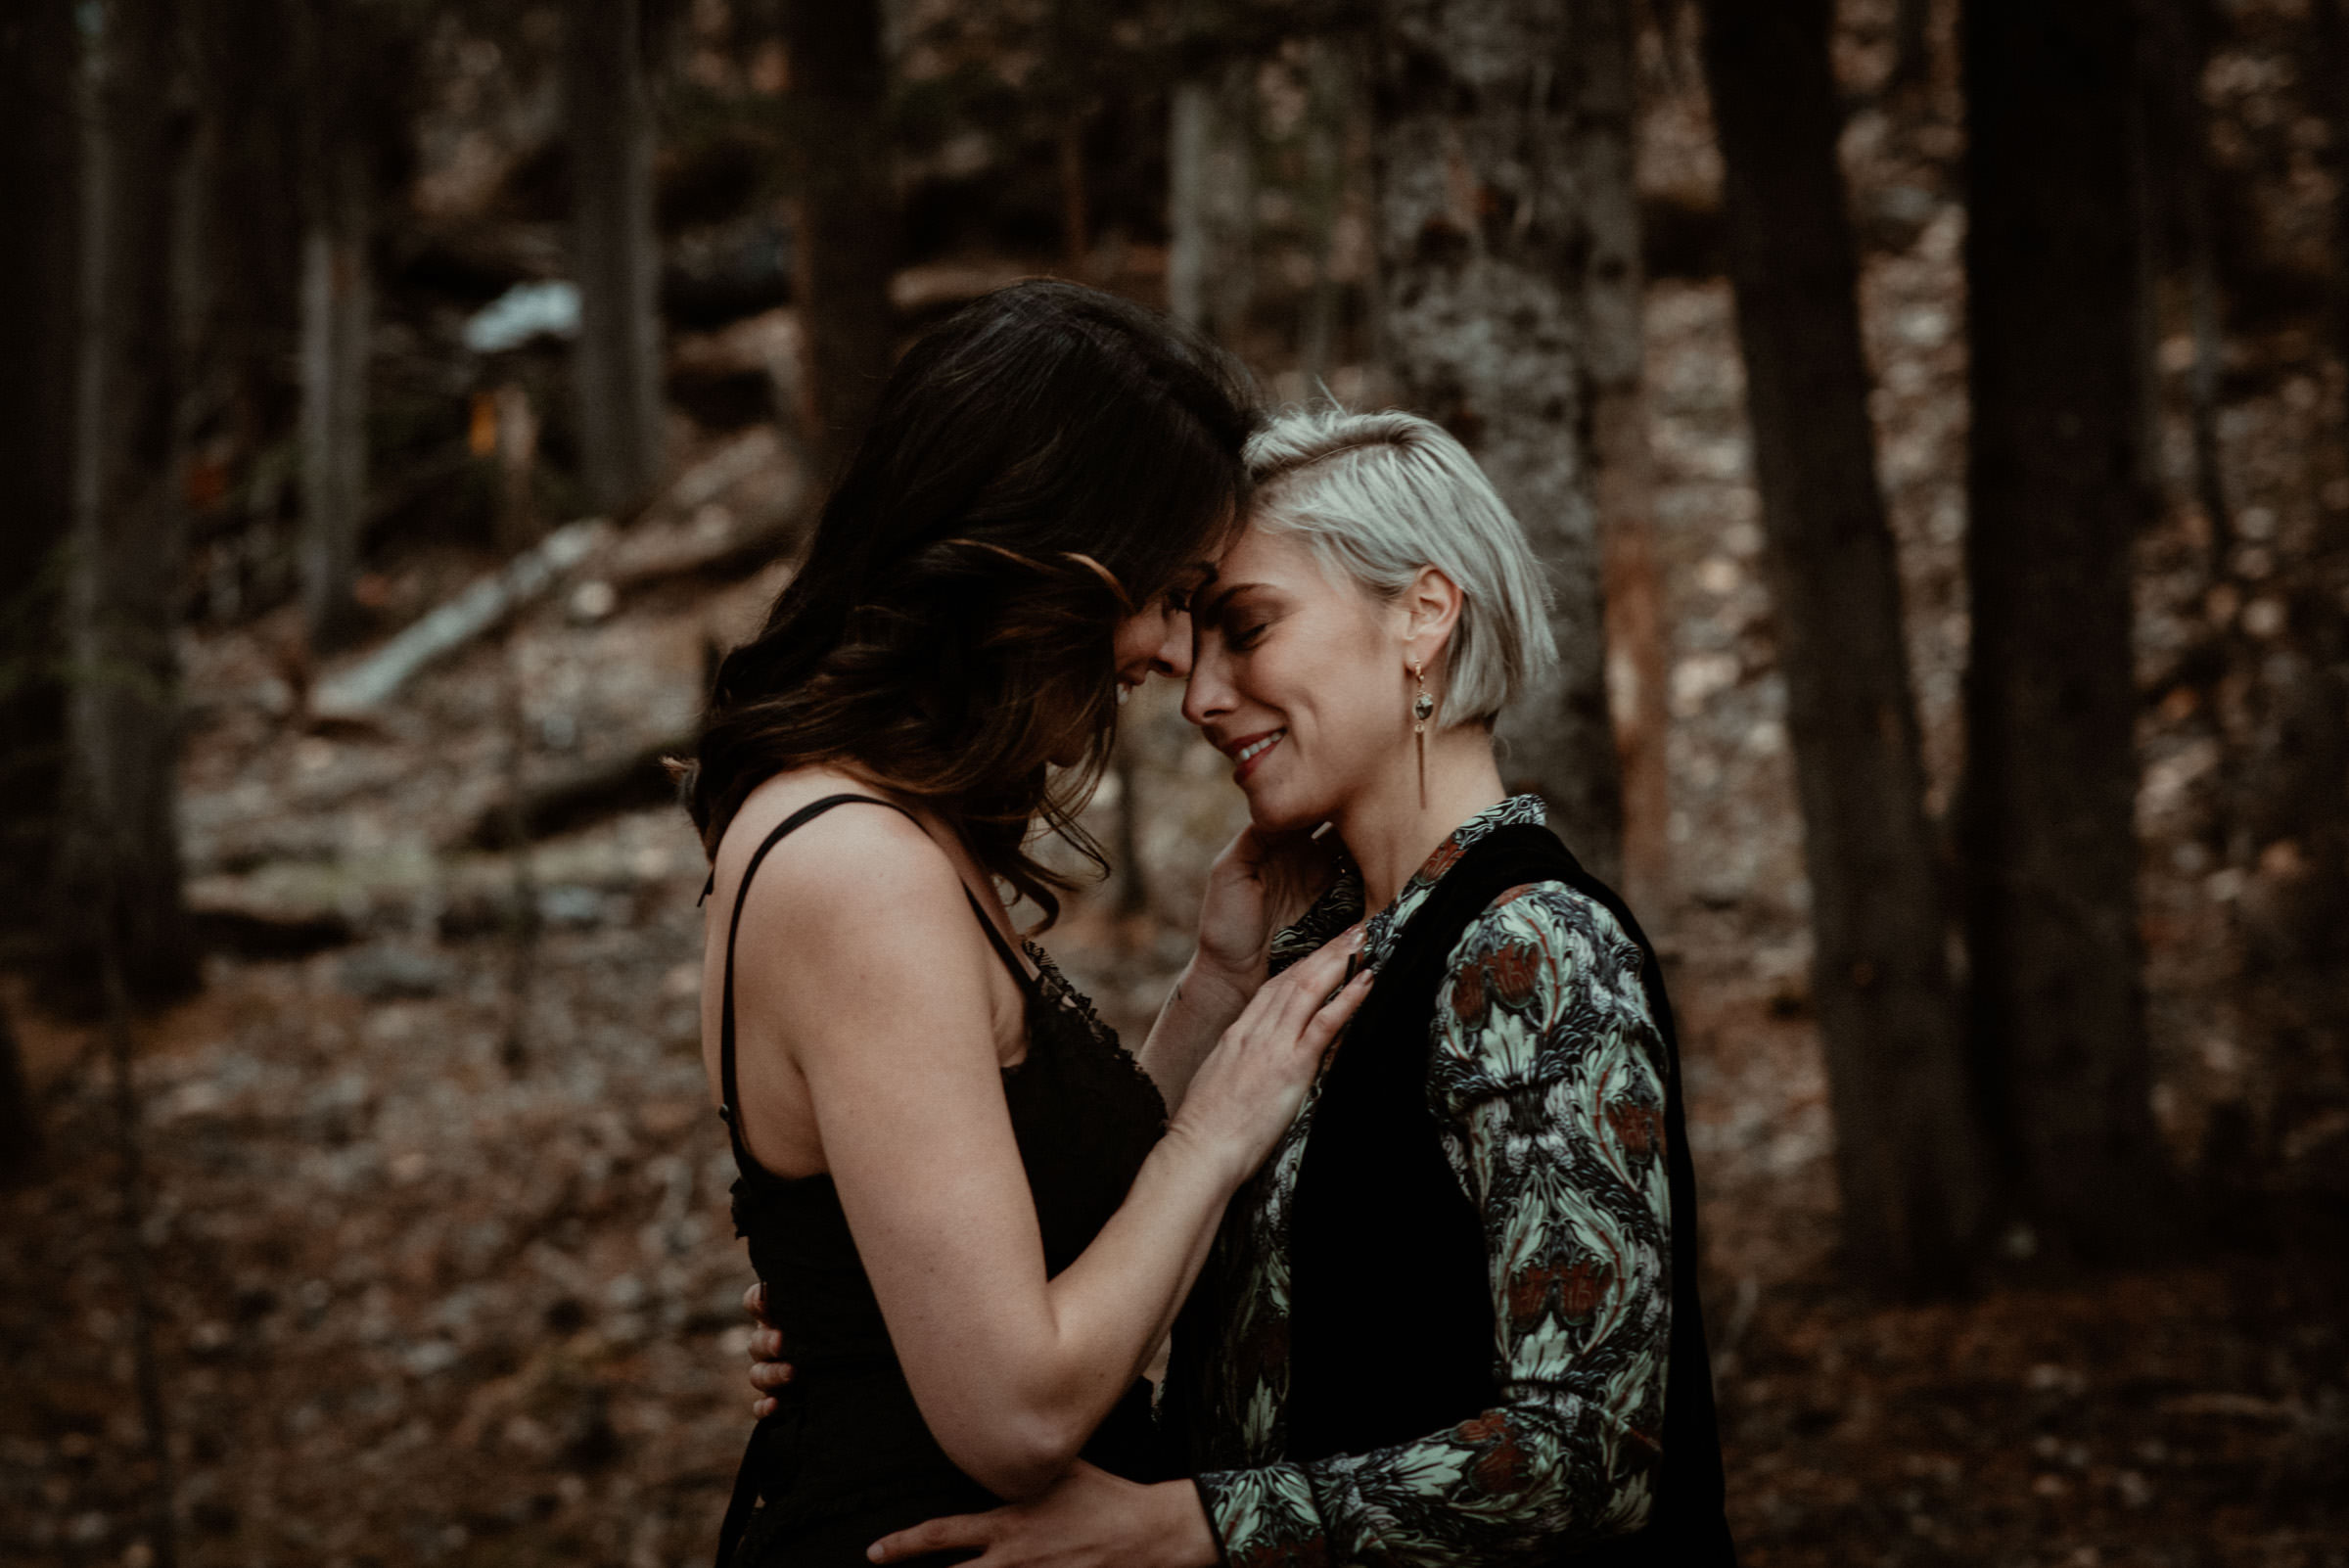 Lesbian elopement in Banff National Park